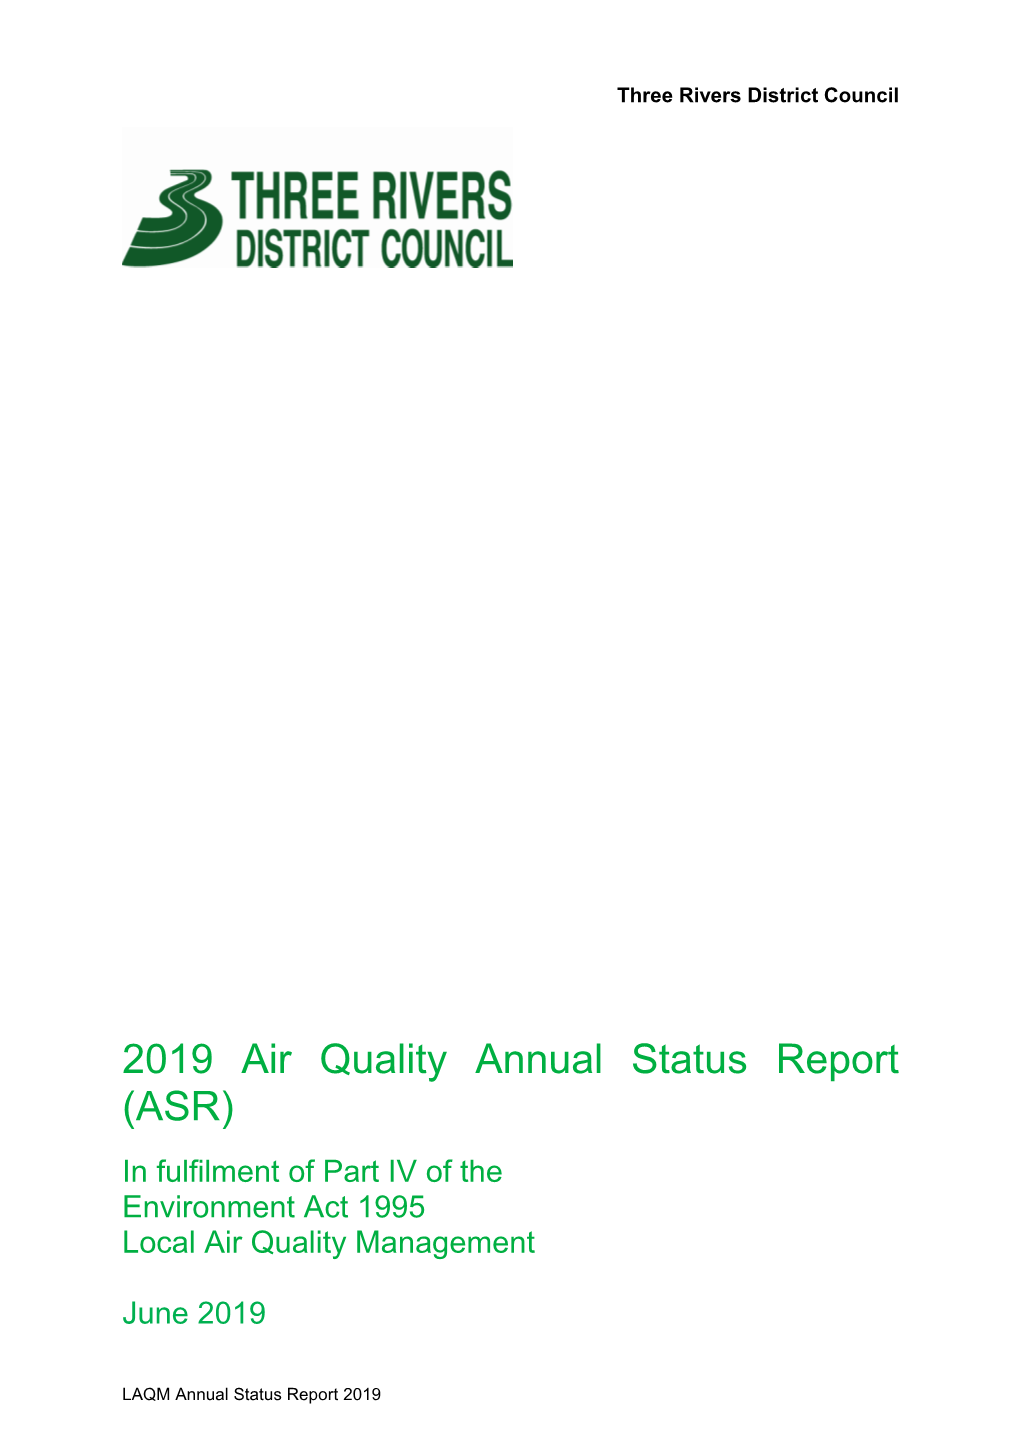 2019 Air Quality Annual Status Report (ASR)